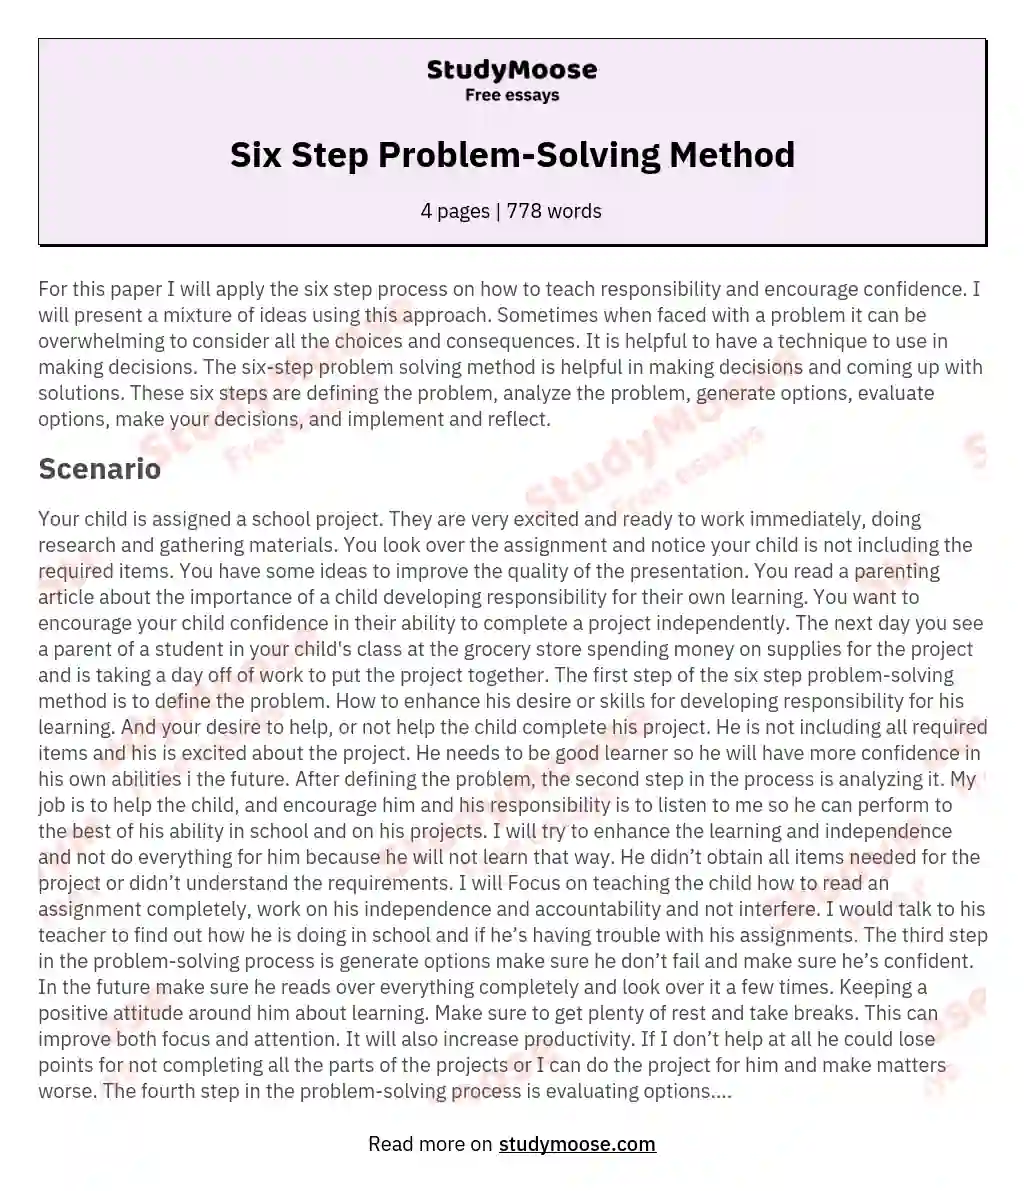 Six Step Problem-Solving Method